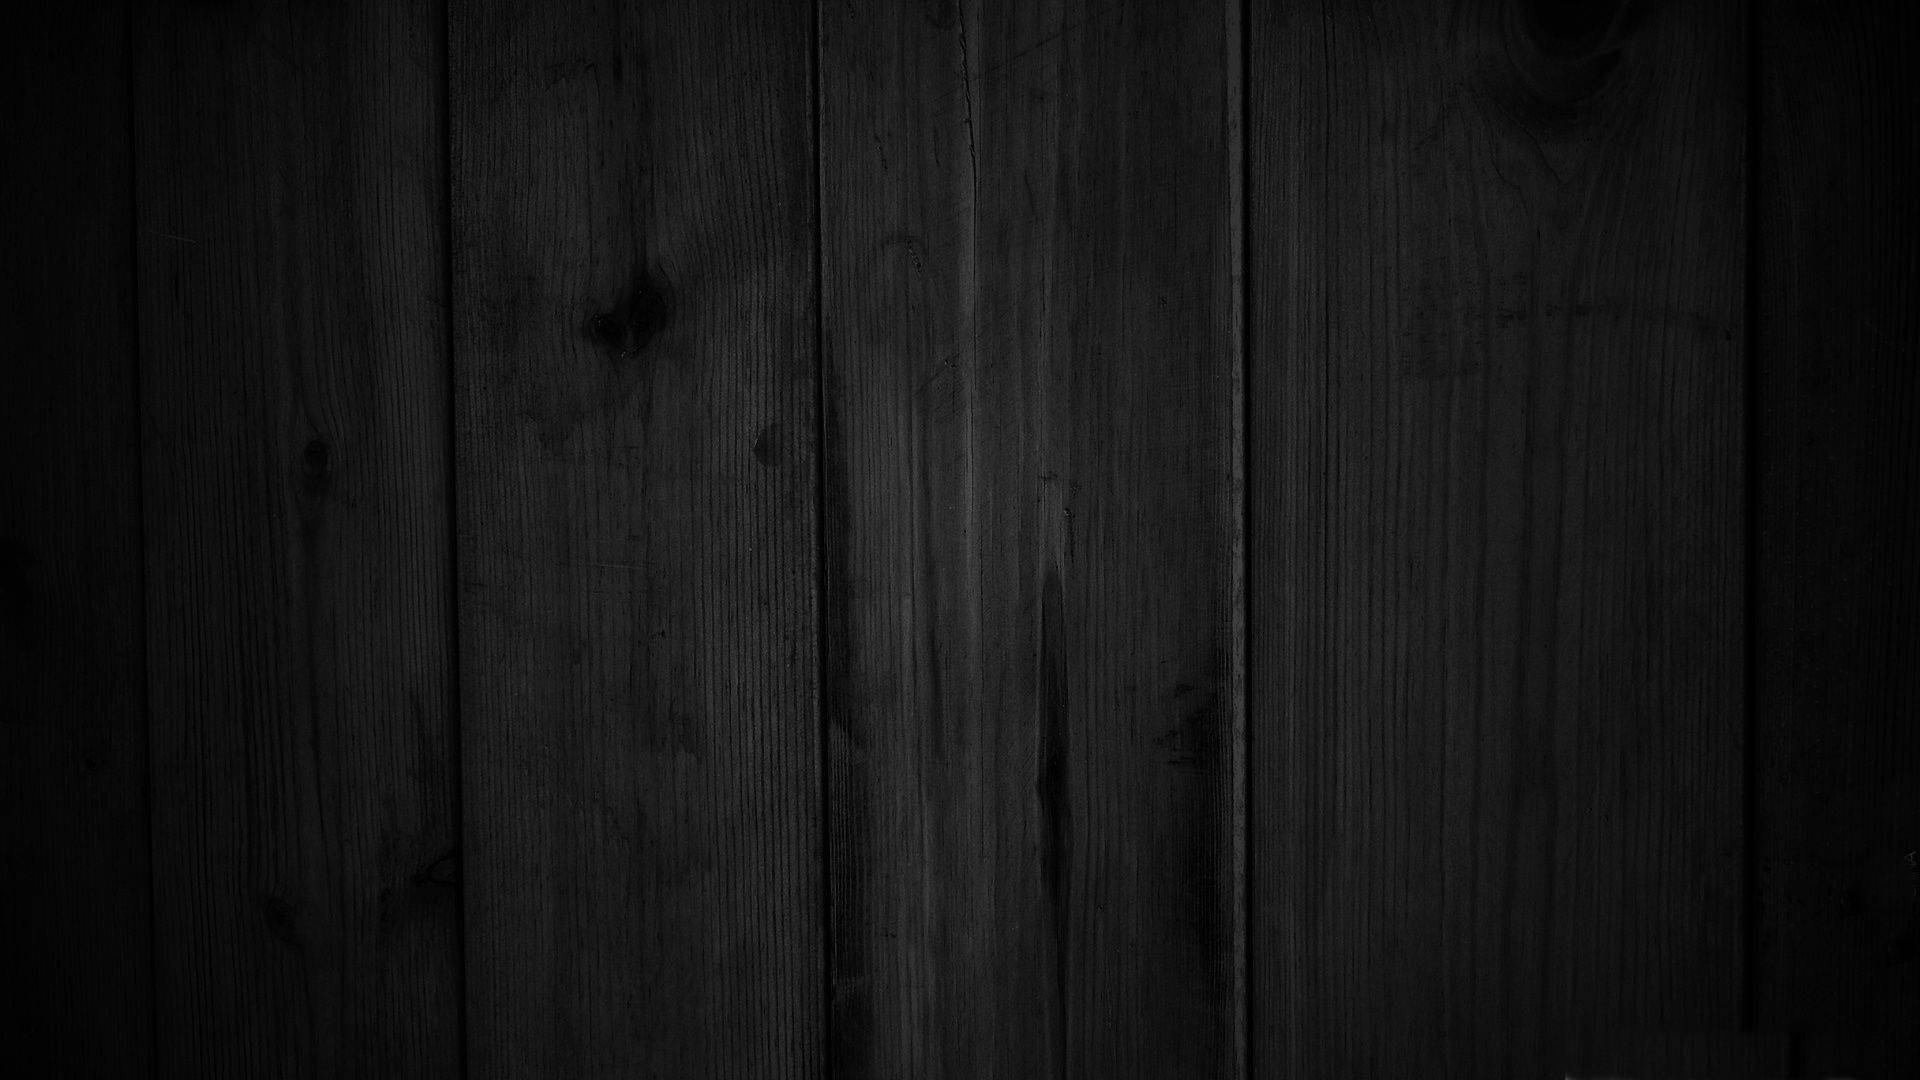 Cool Dark Wooden Wall Background